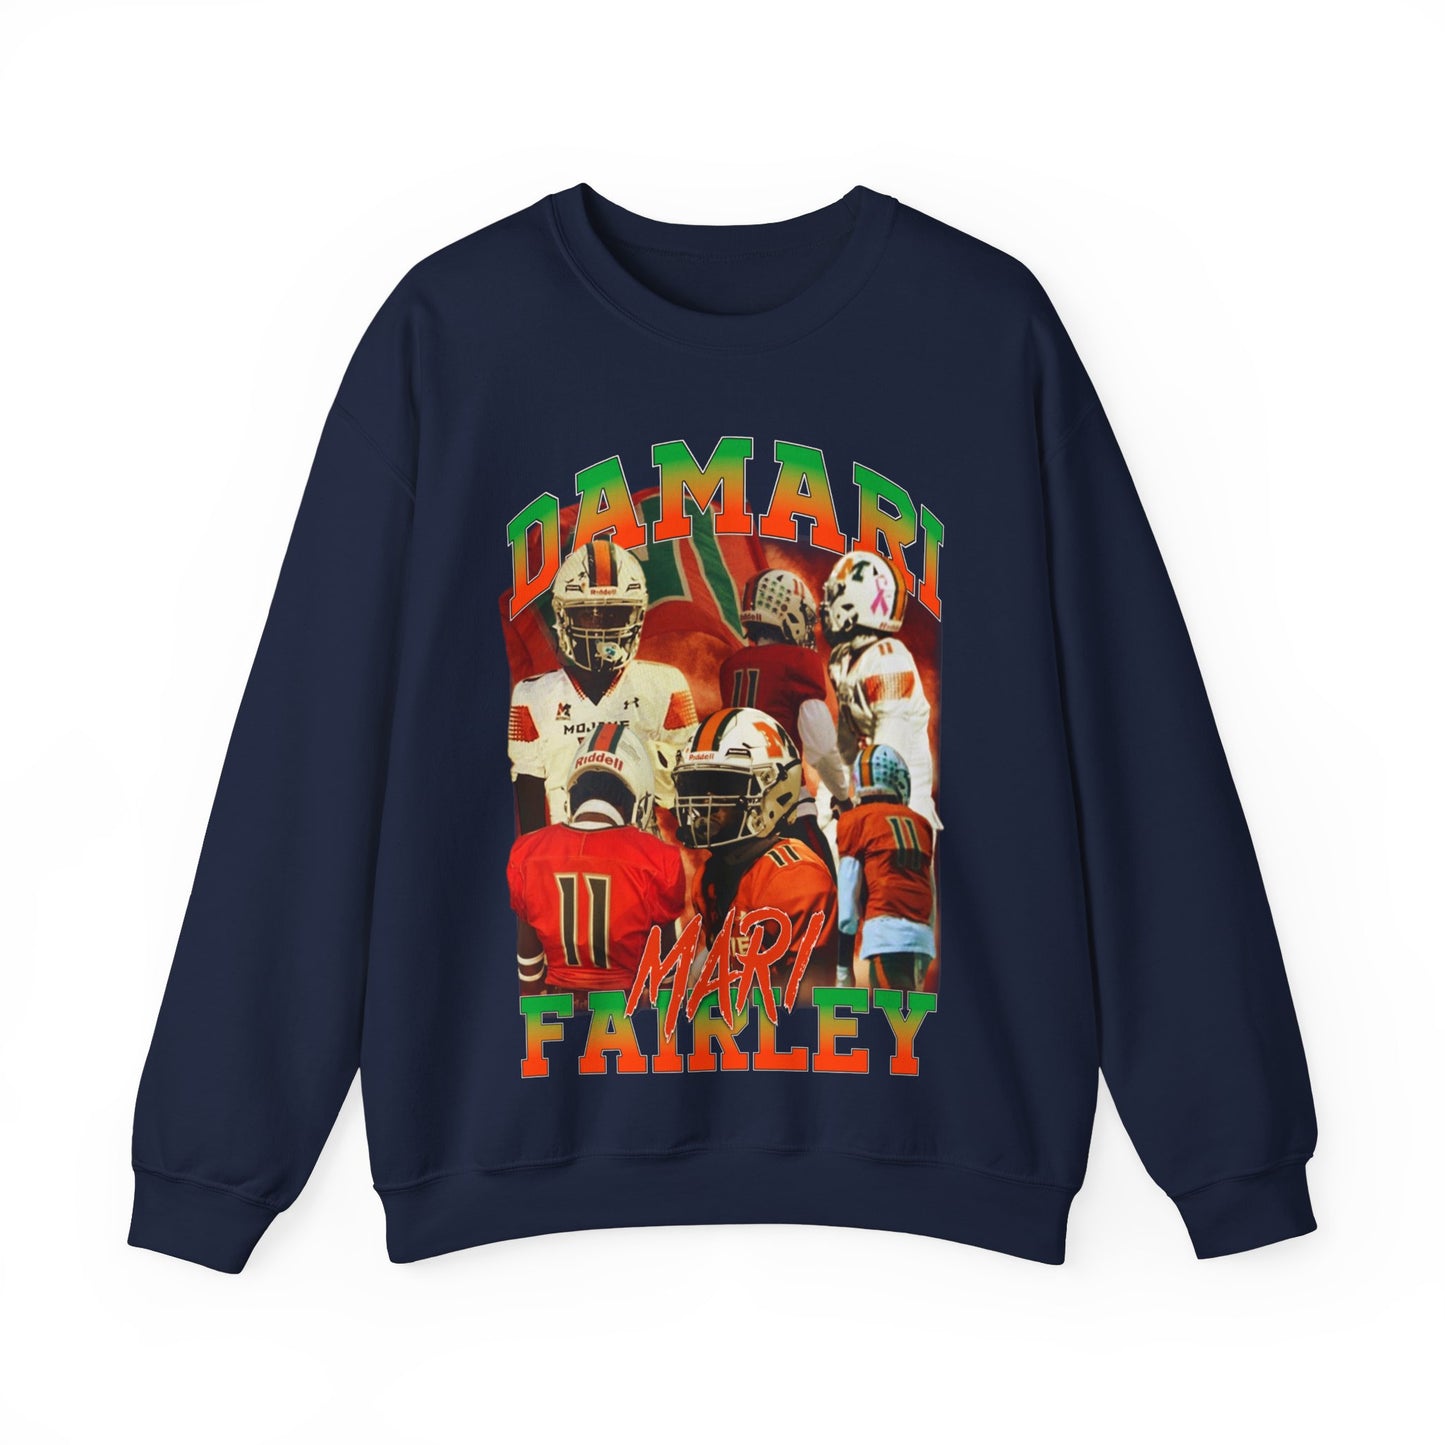 Damari Fairley Crewneck Sweatshirt